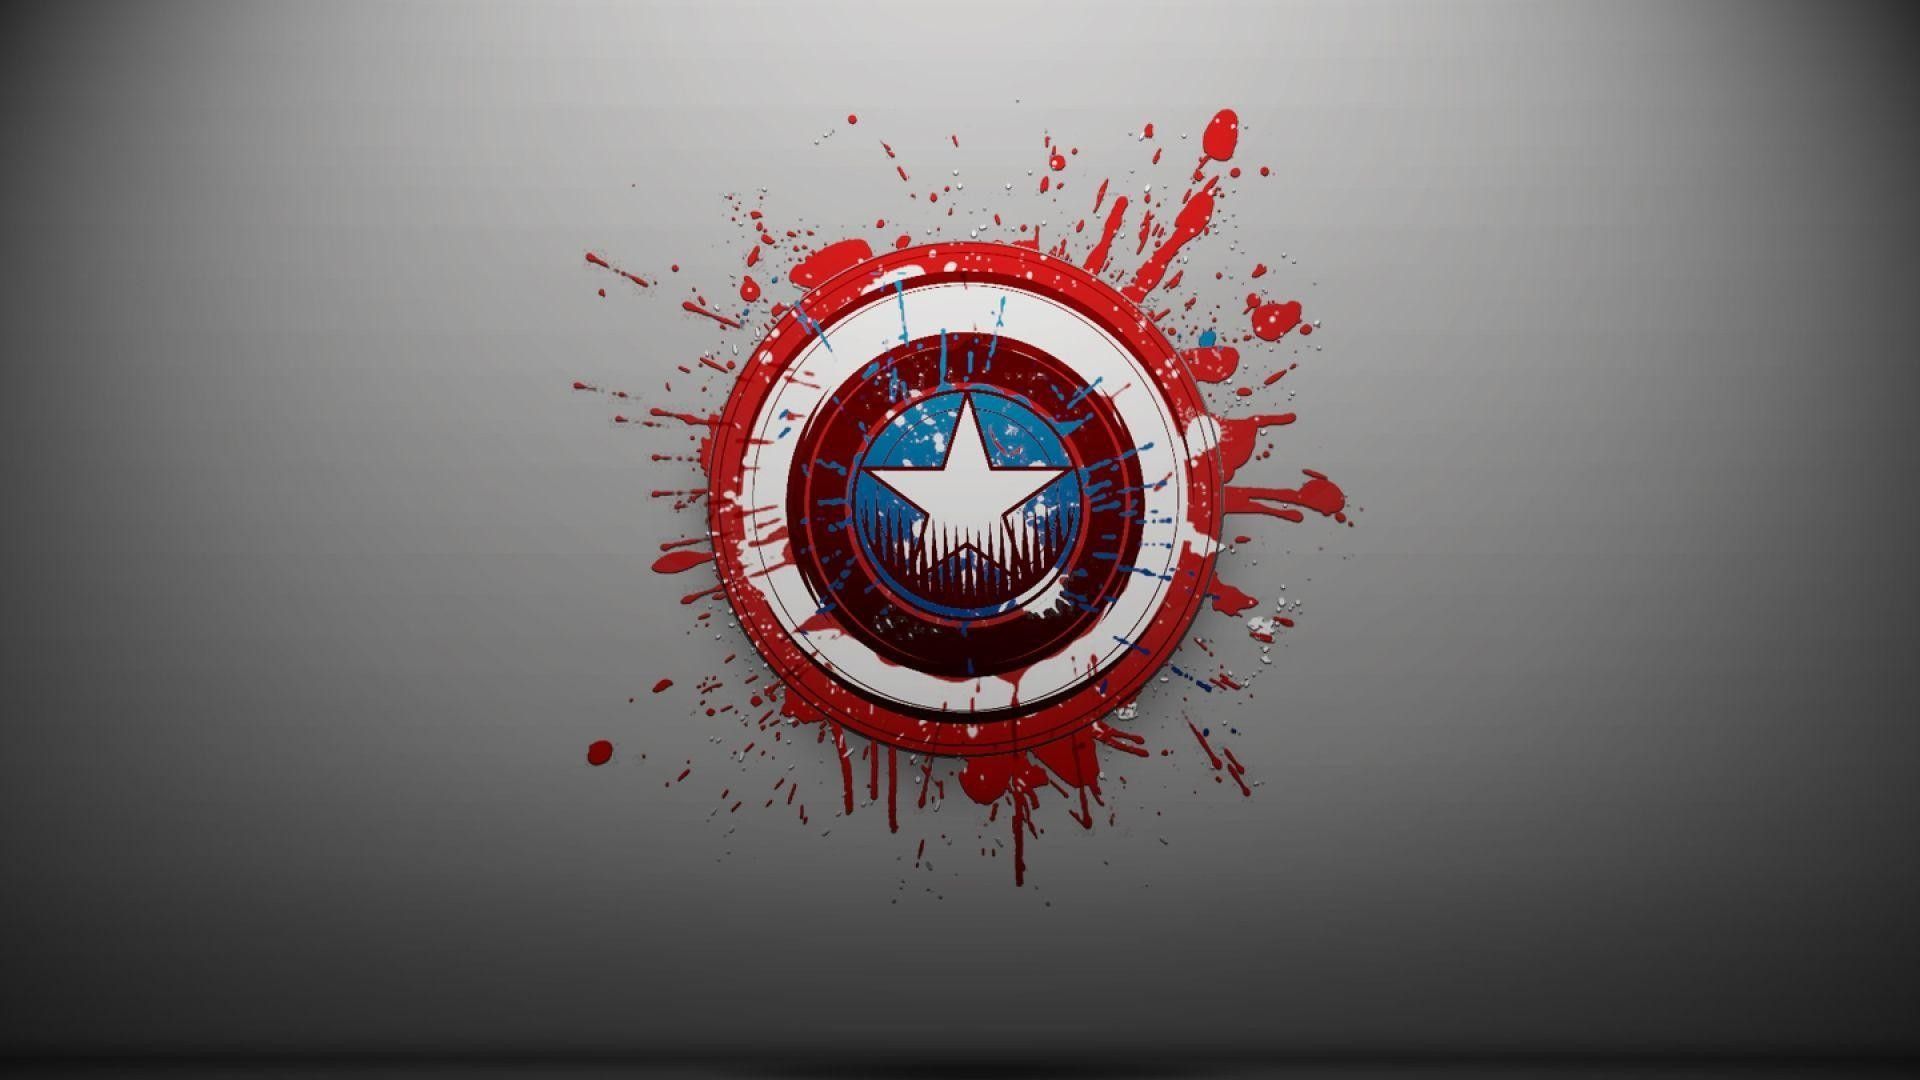 Captain America Phone Wallpapers